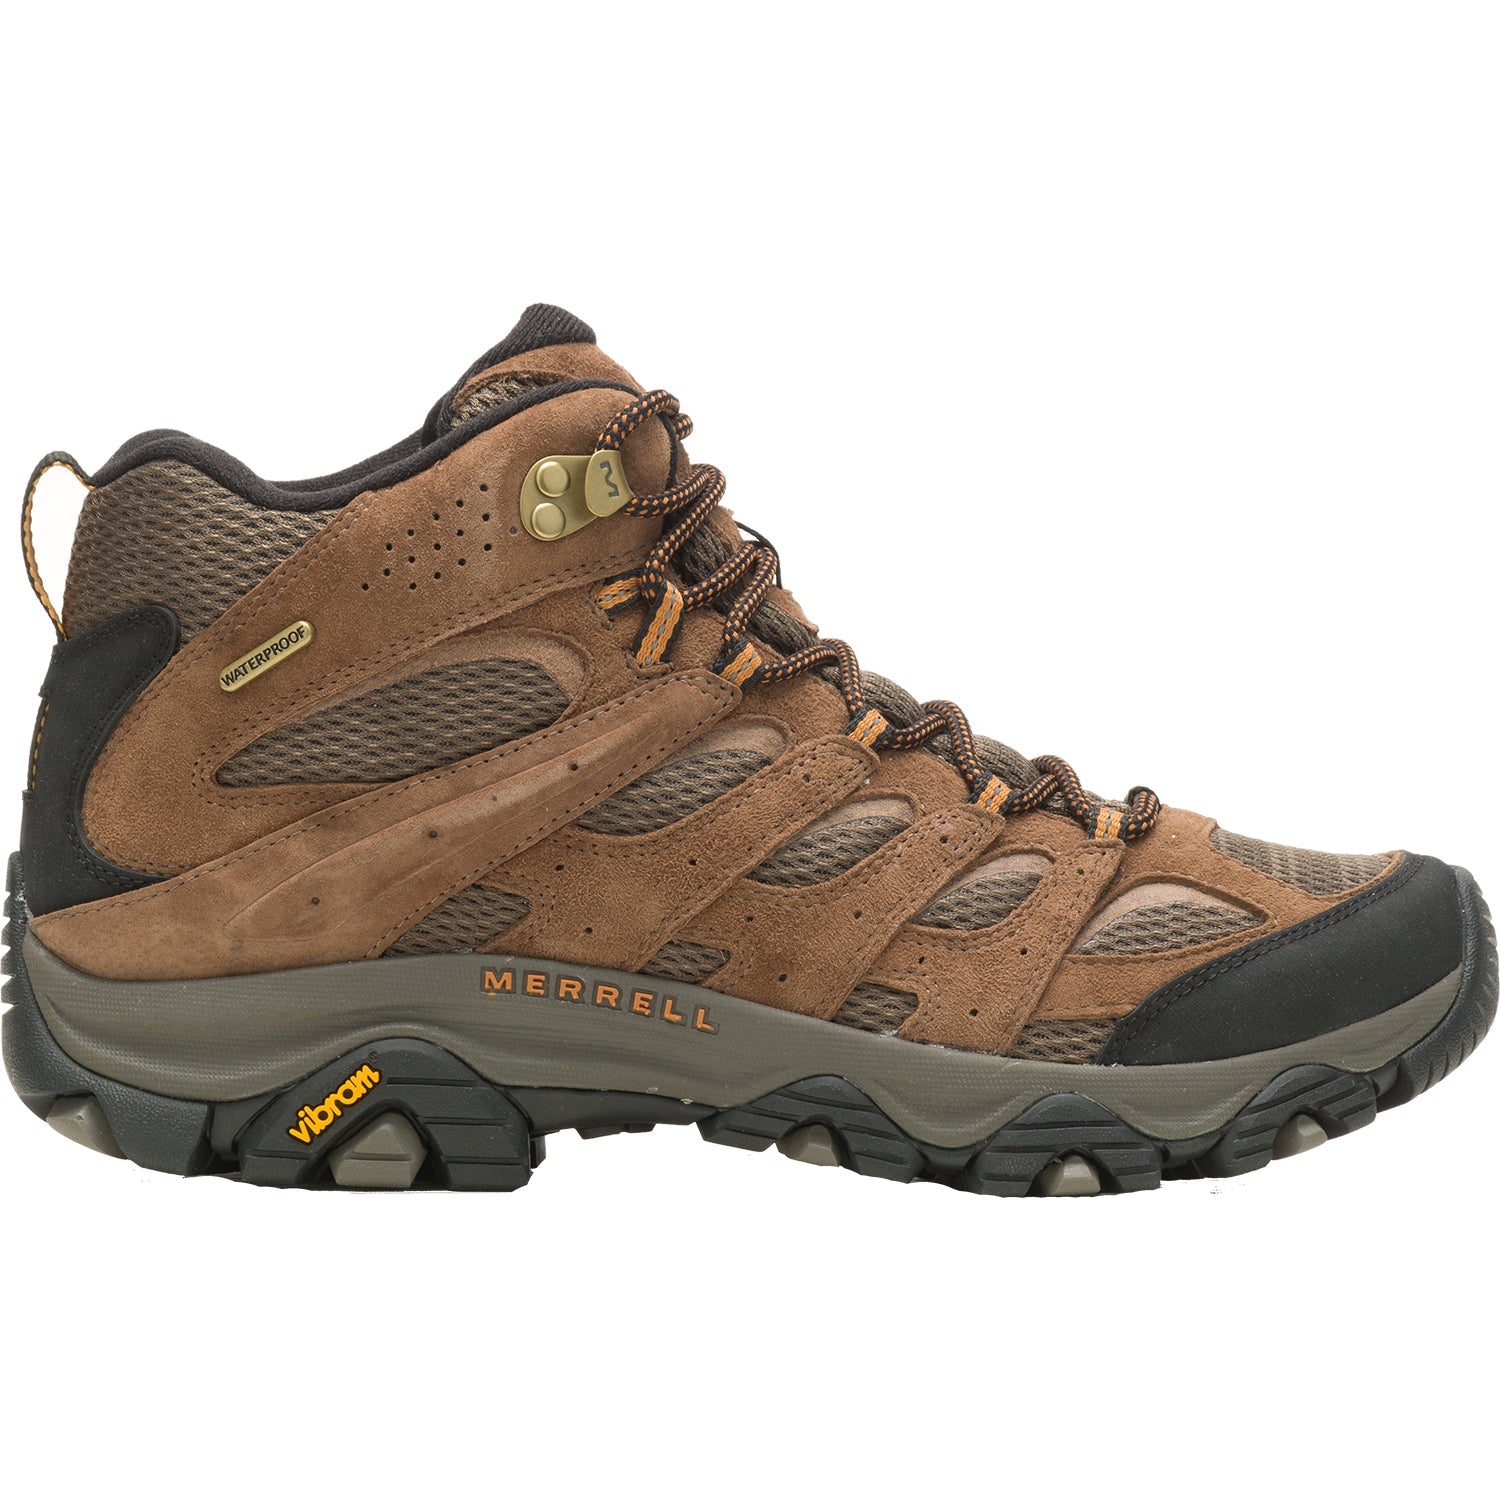 Merrell Moab 3 Mid Waterproof | Men's Hiking Boots | Footwear etc.